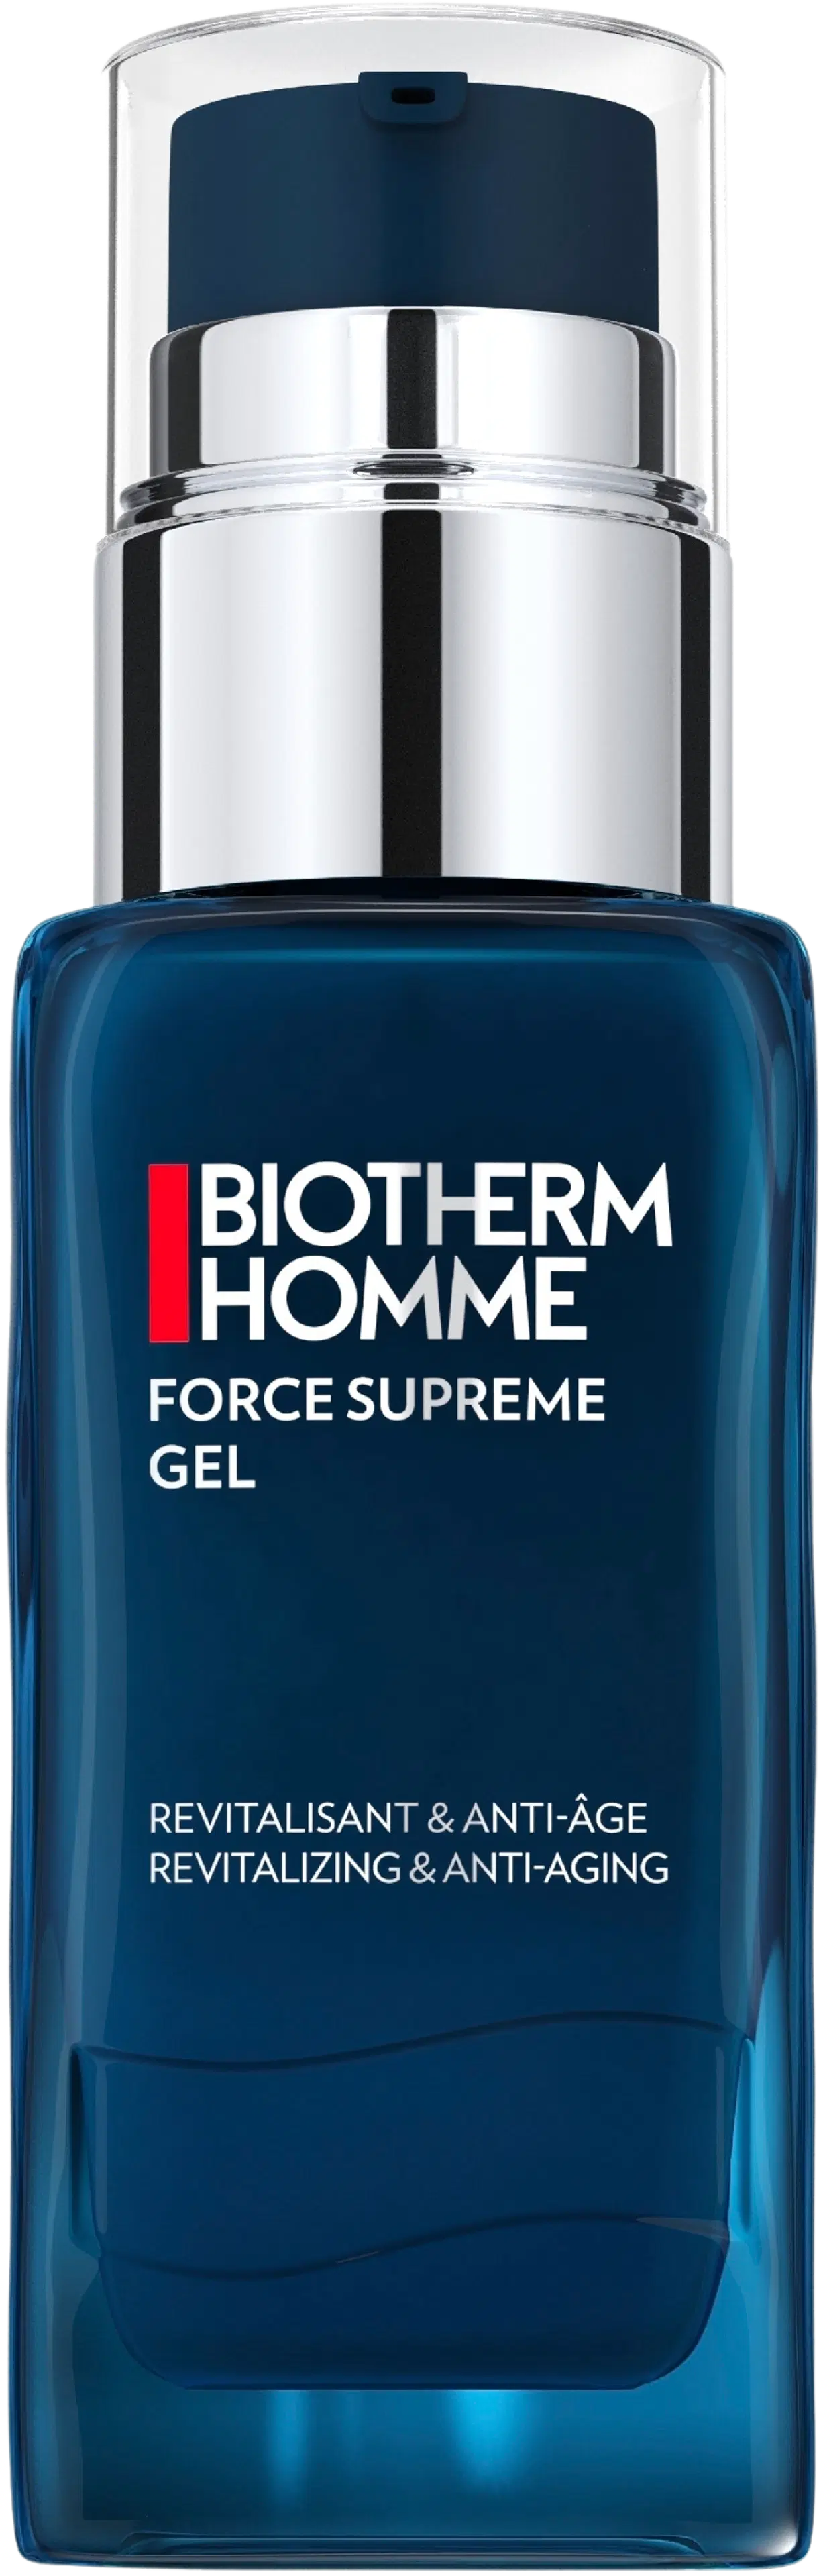 Biotherm Homme Force Supreme Anti-Aging Gel kasvogeeli 50 ml